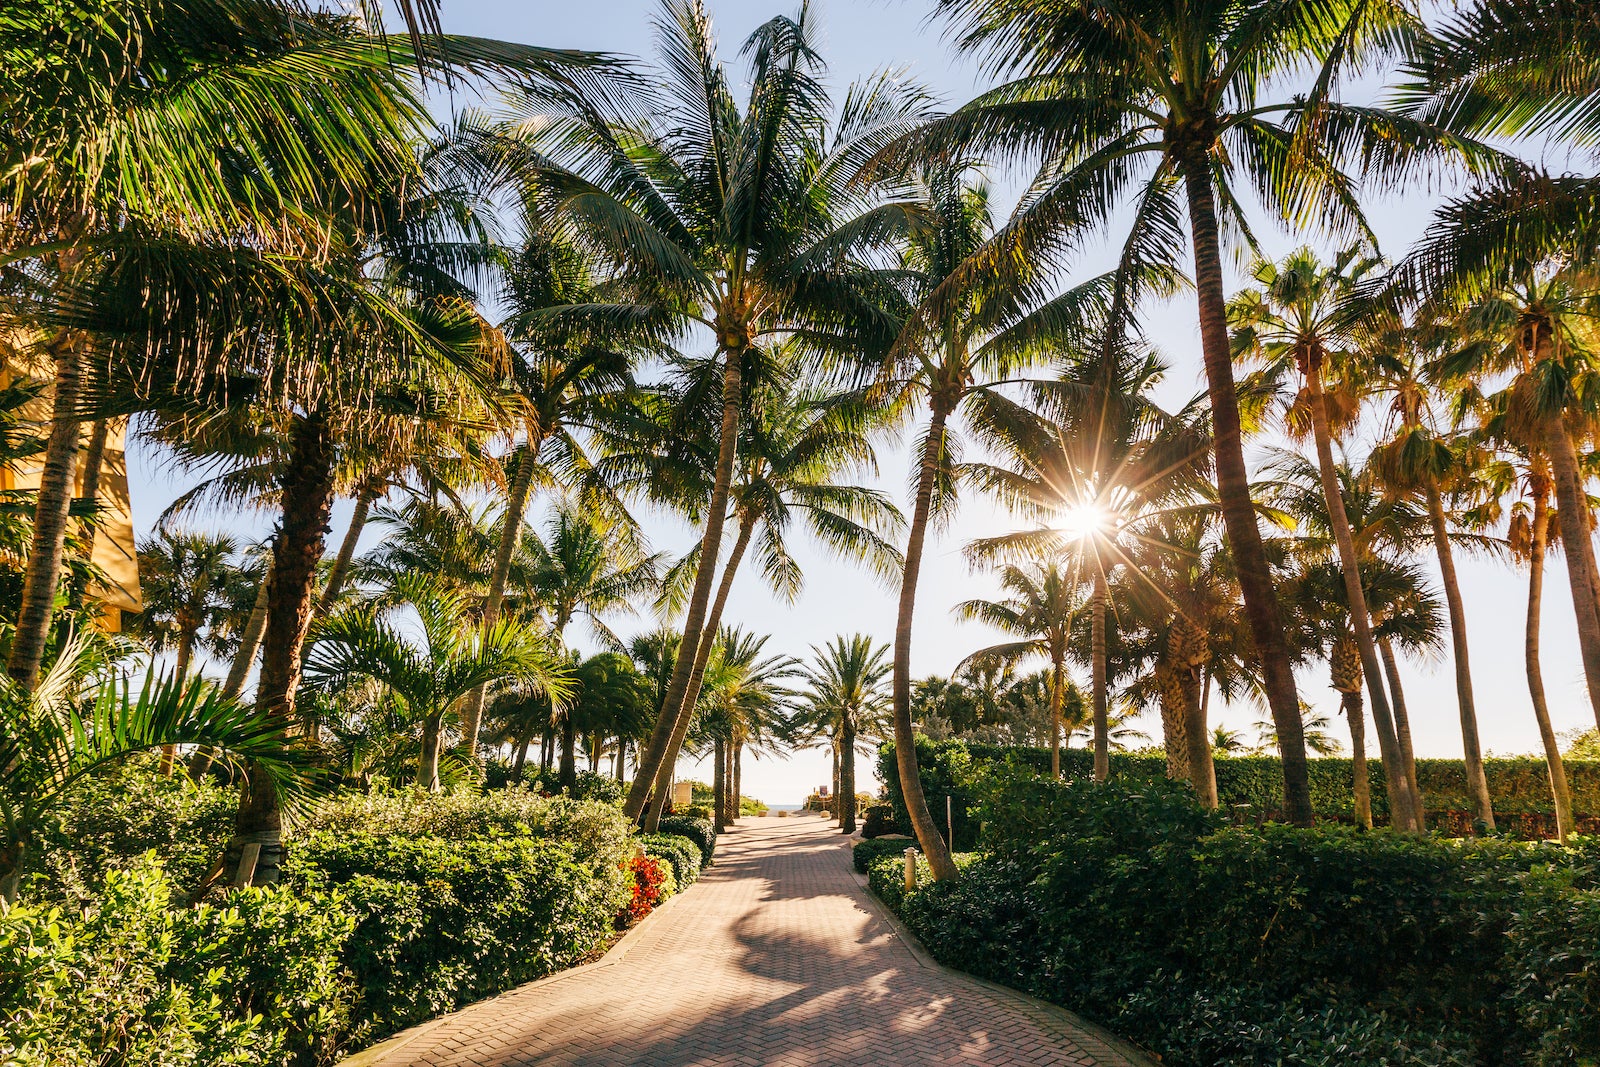 Palm trees in Miami Beach, Florida